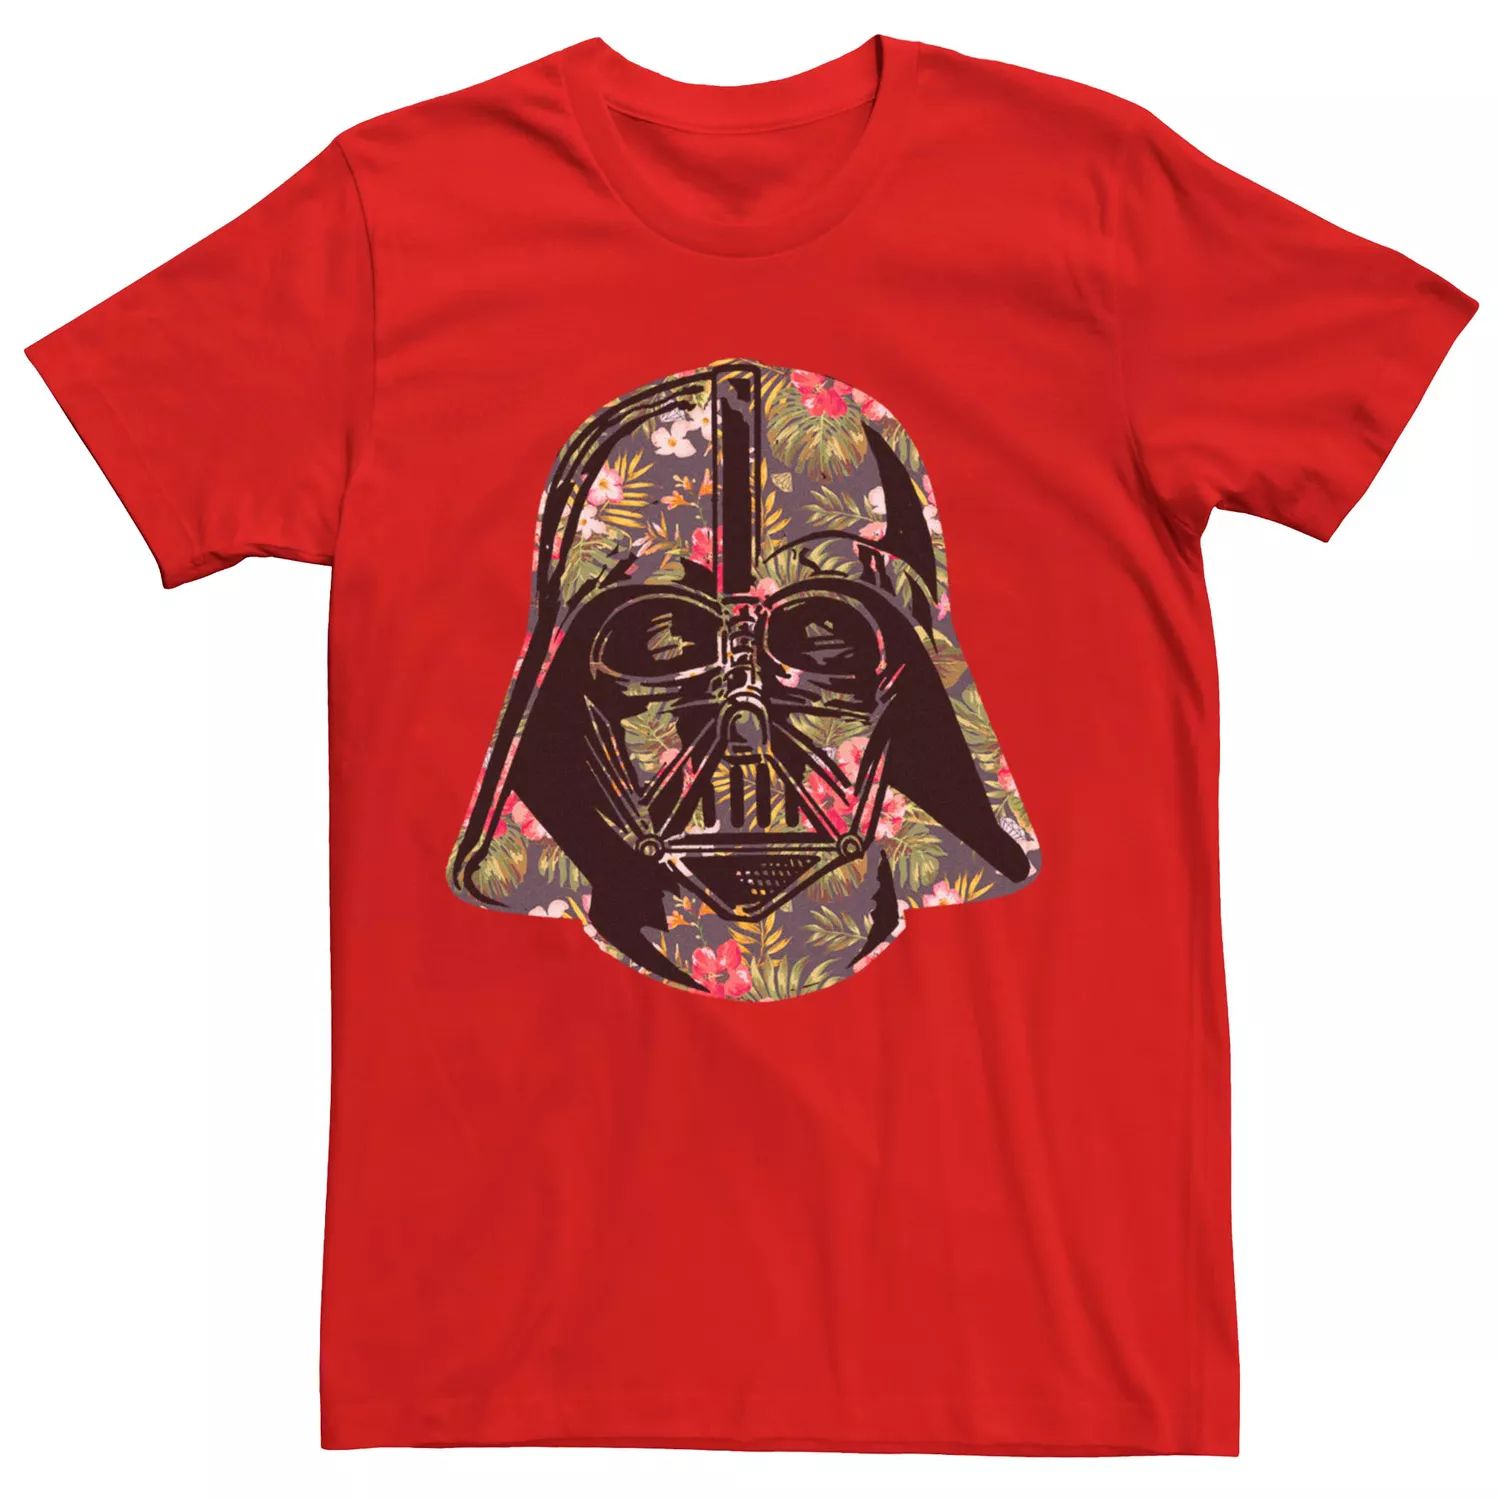 Мужская футболка со шлемом Дарта Вейдера «Звездные войны» Licensed Character, красный мужская футболка со звездами и шлемом дарта вейдера звездные войны licensed character